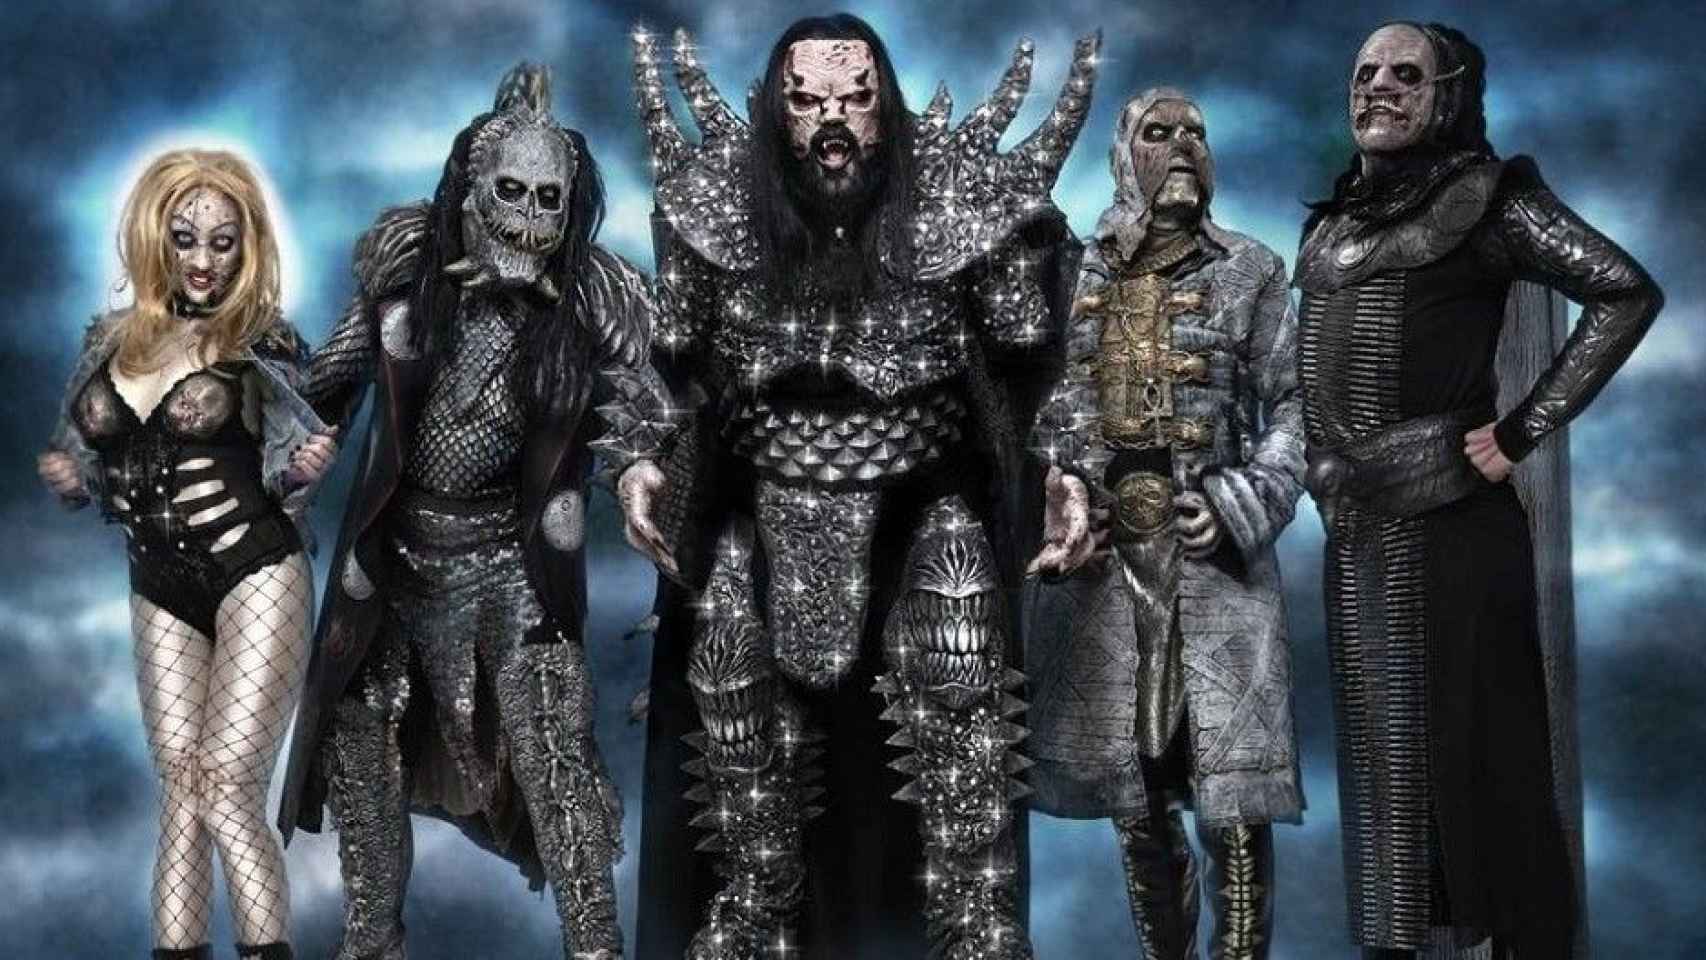 El grupo de heavy metal Lordi / LORDI.FI